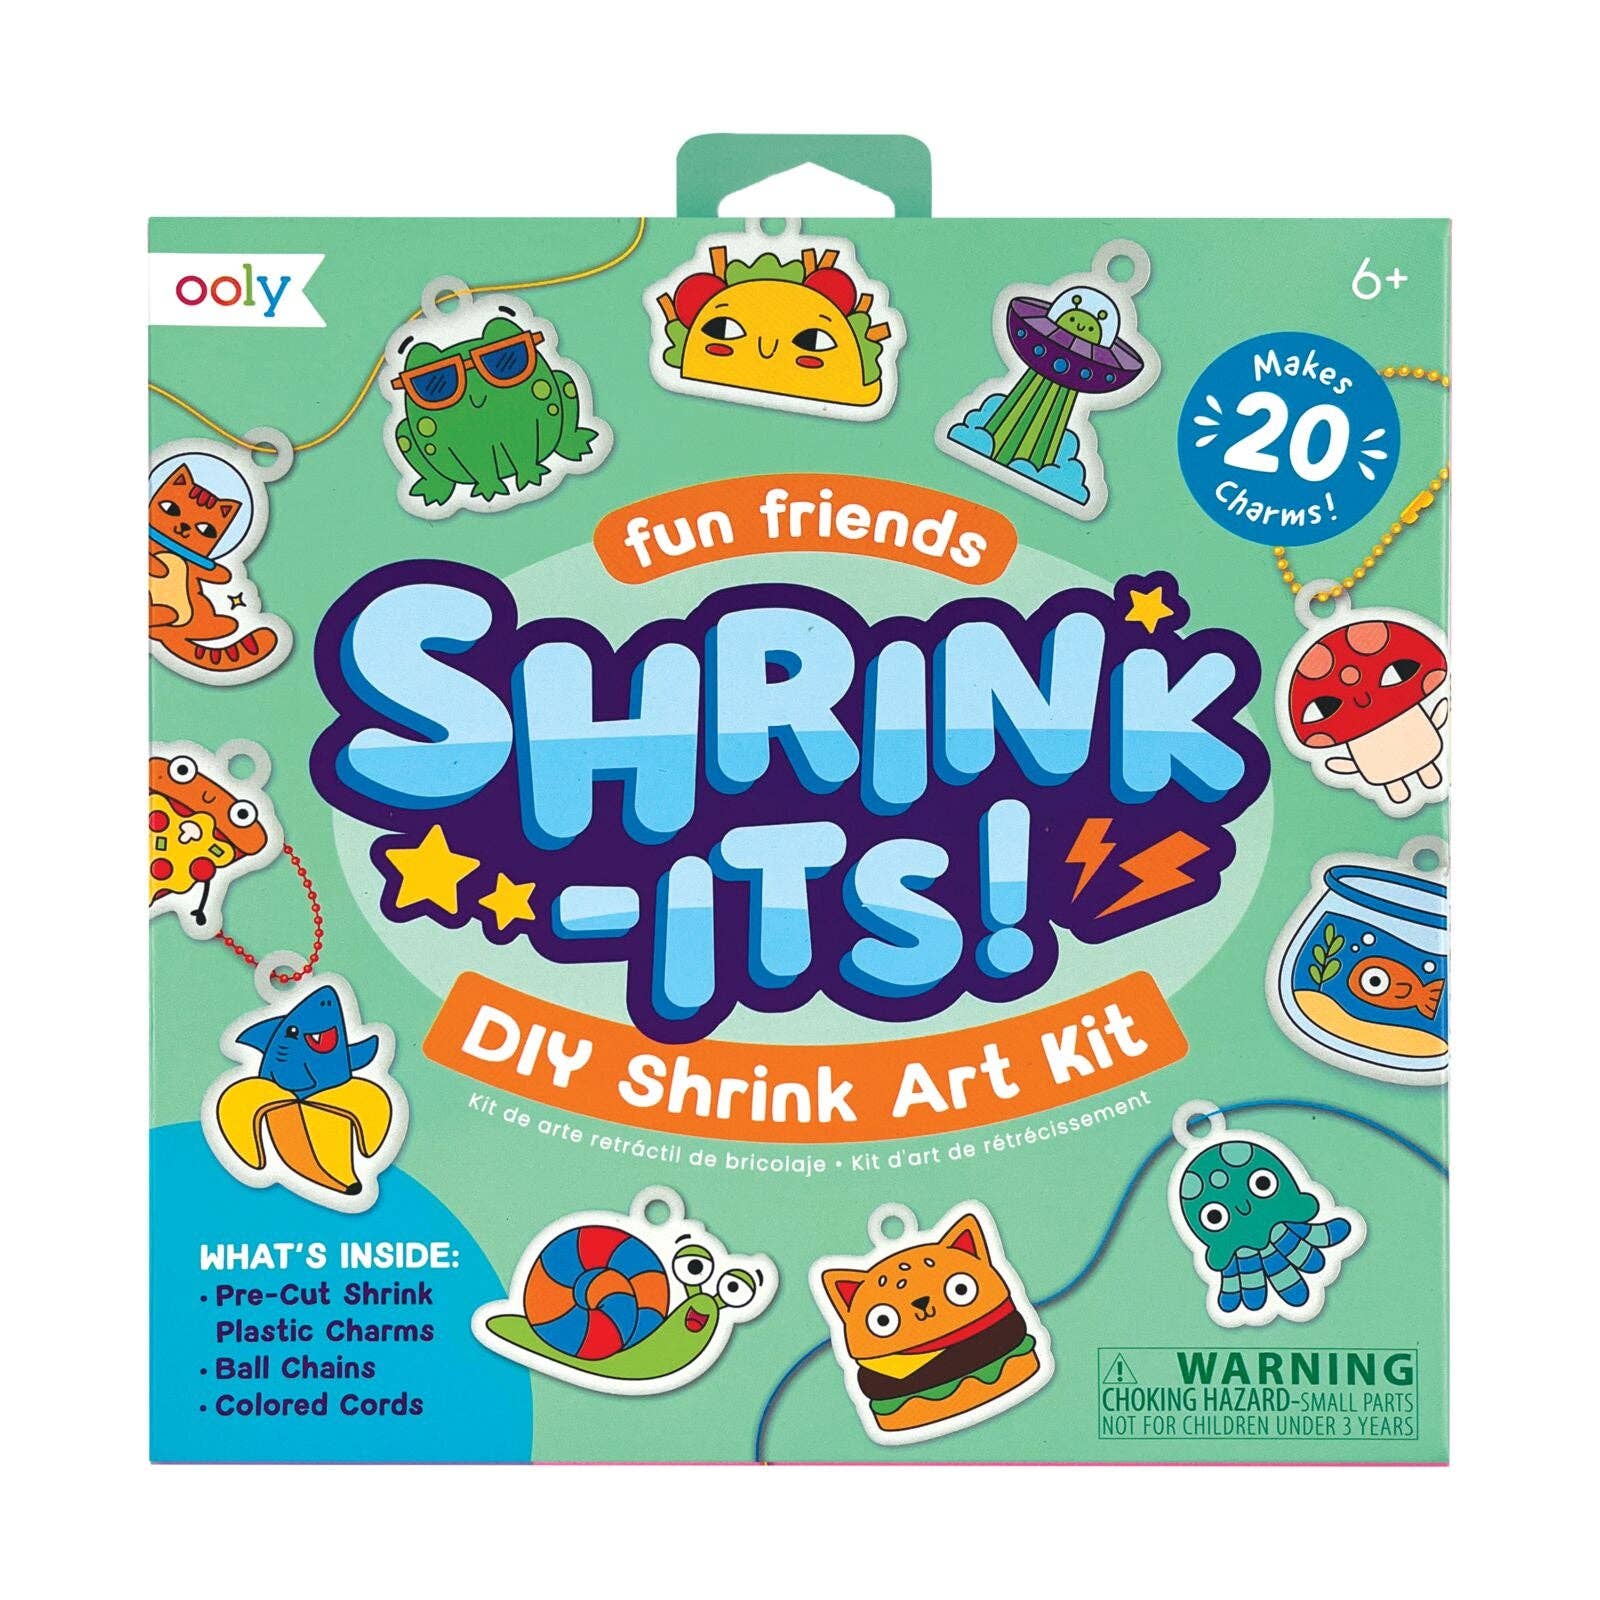 OOLY Shrink-Its! D.I.Y. Shrink Art Kit | Fun Friends